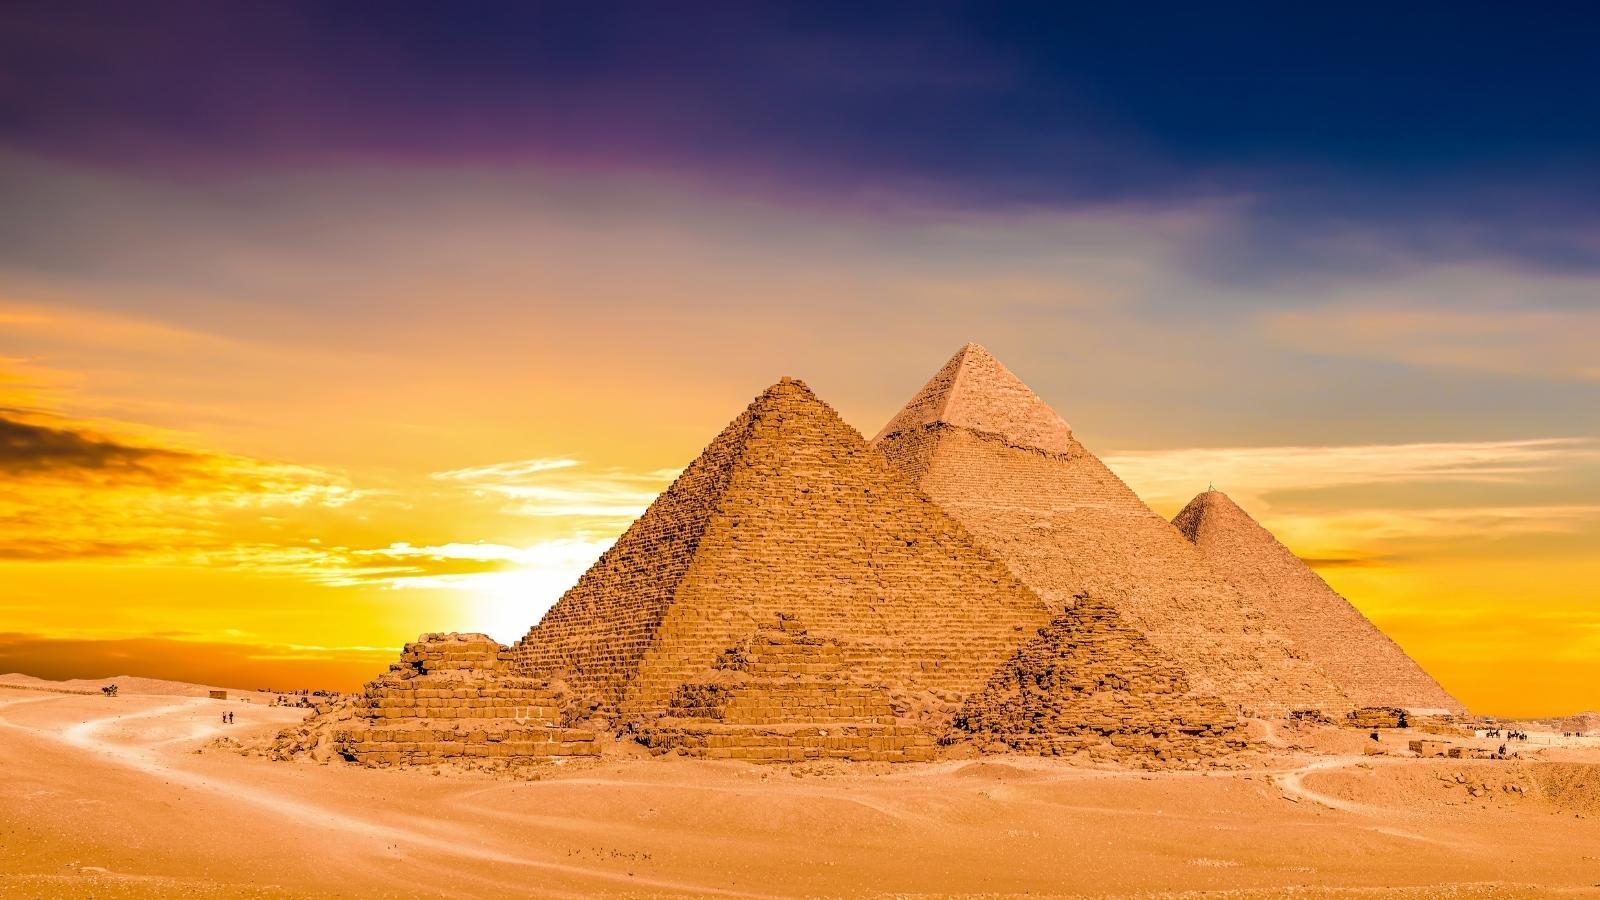 La piramide - Capire i propri sogni - Kaya